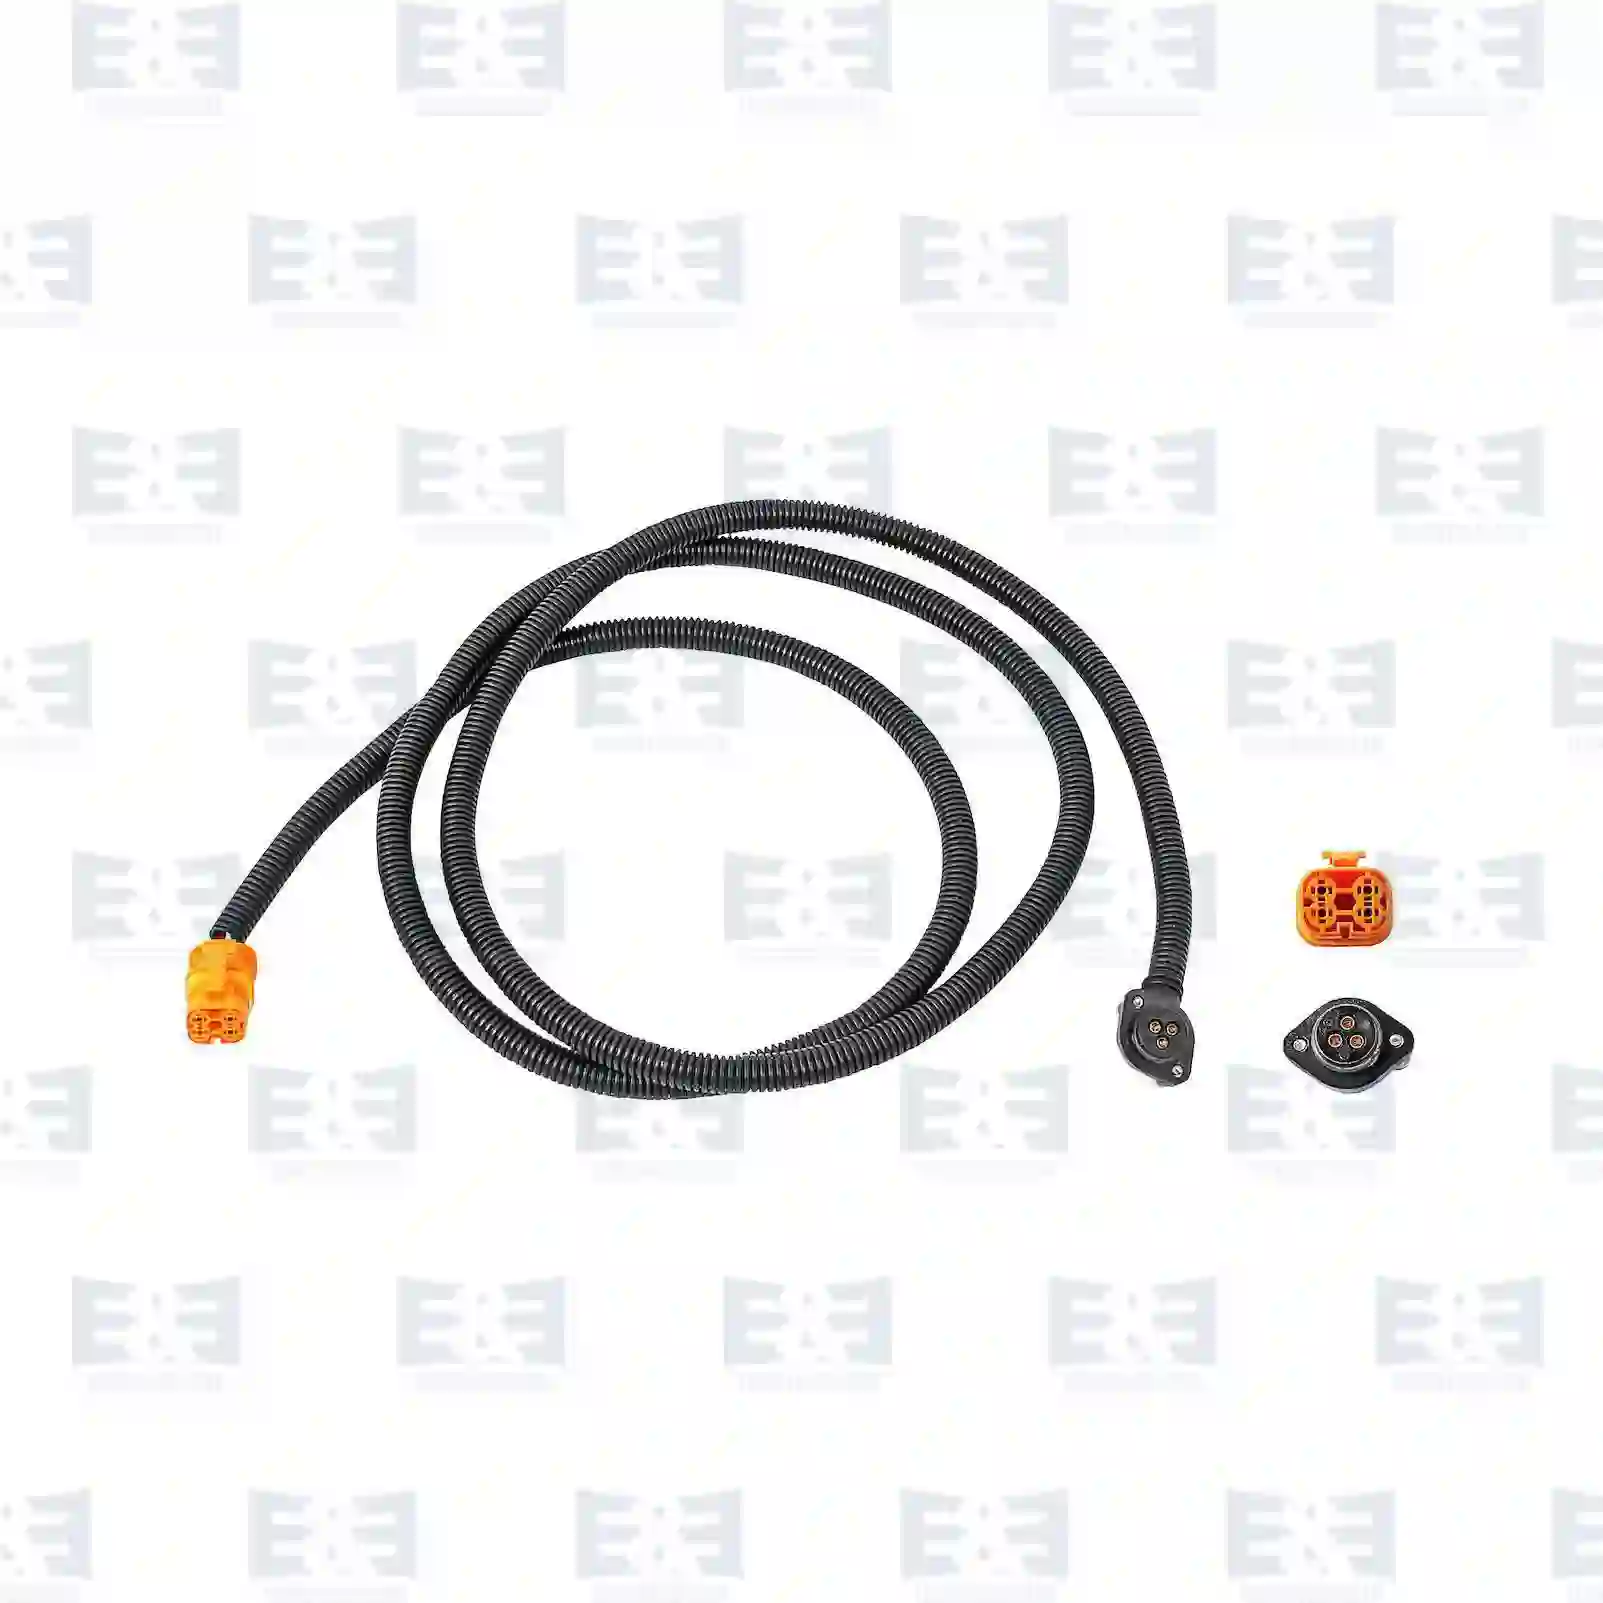  Cable harness, orange || E&E Truck Spare Parts | Truck Spare Parts, Auotomotive Spare Parts